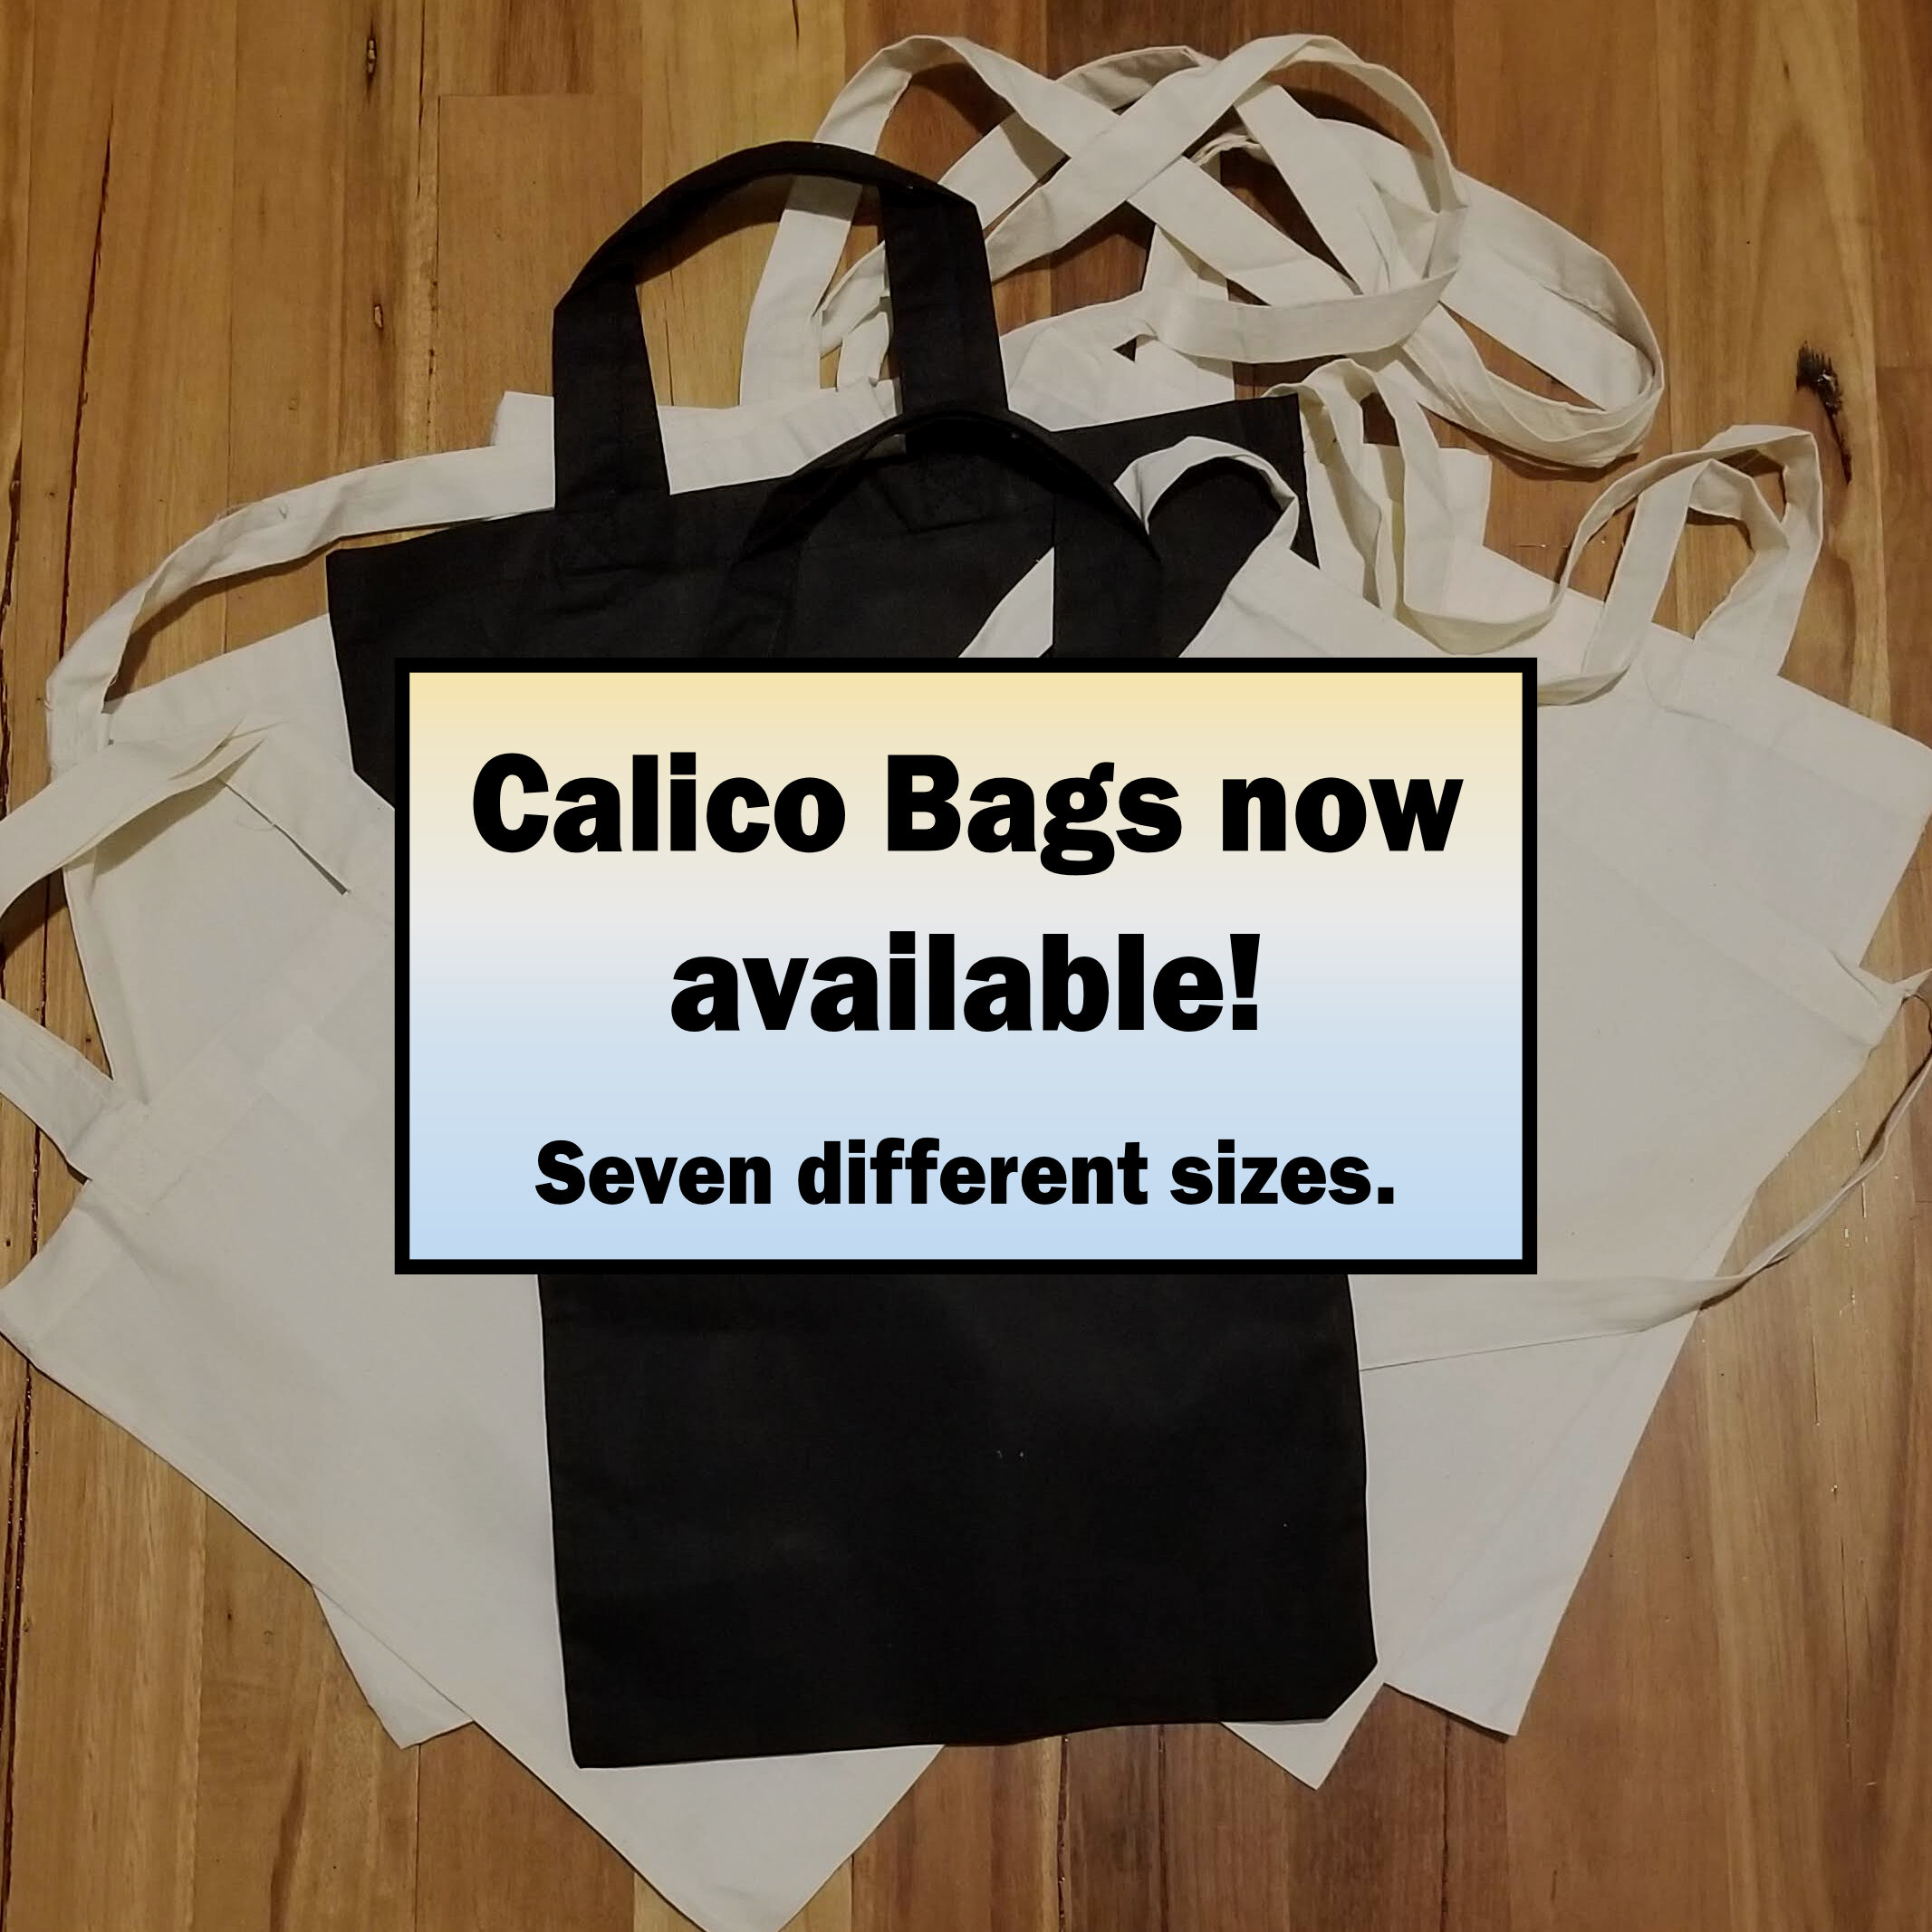 Calico Bags Insta Post.jpg